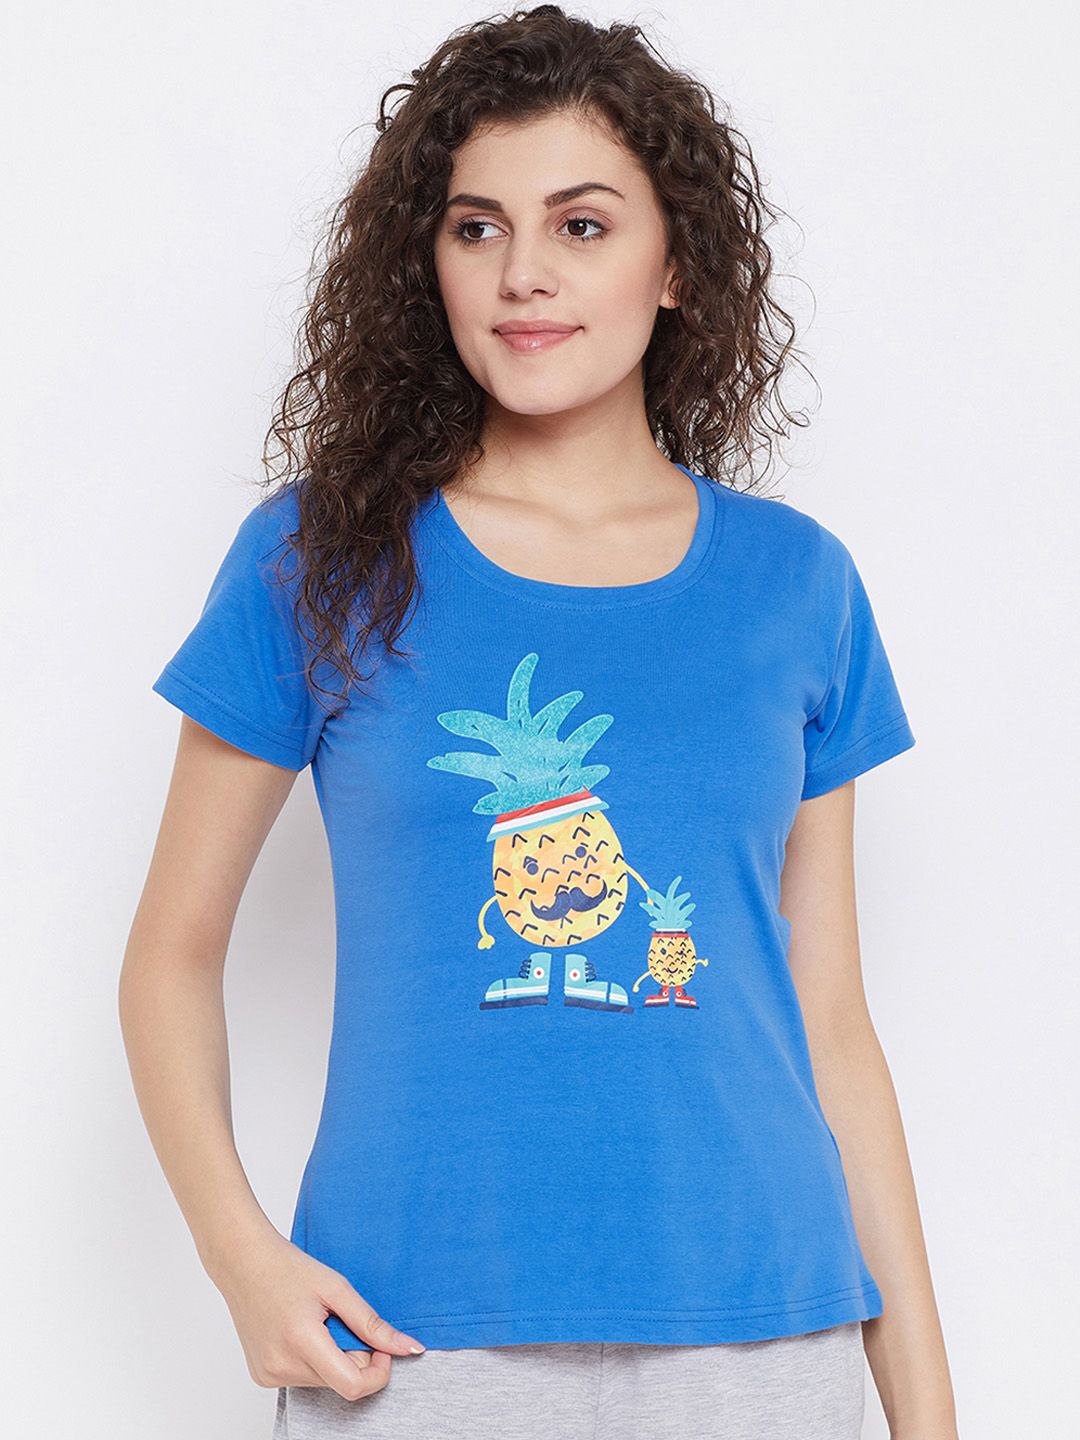 Clovia Women Blue & Yellow Printed Lounge T-Shirt Price in India